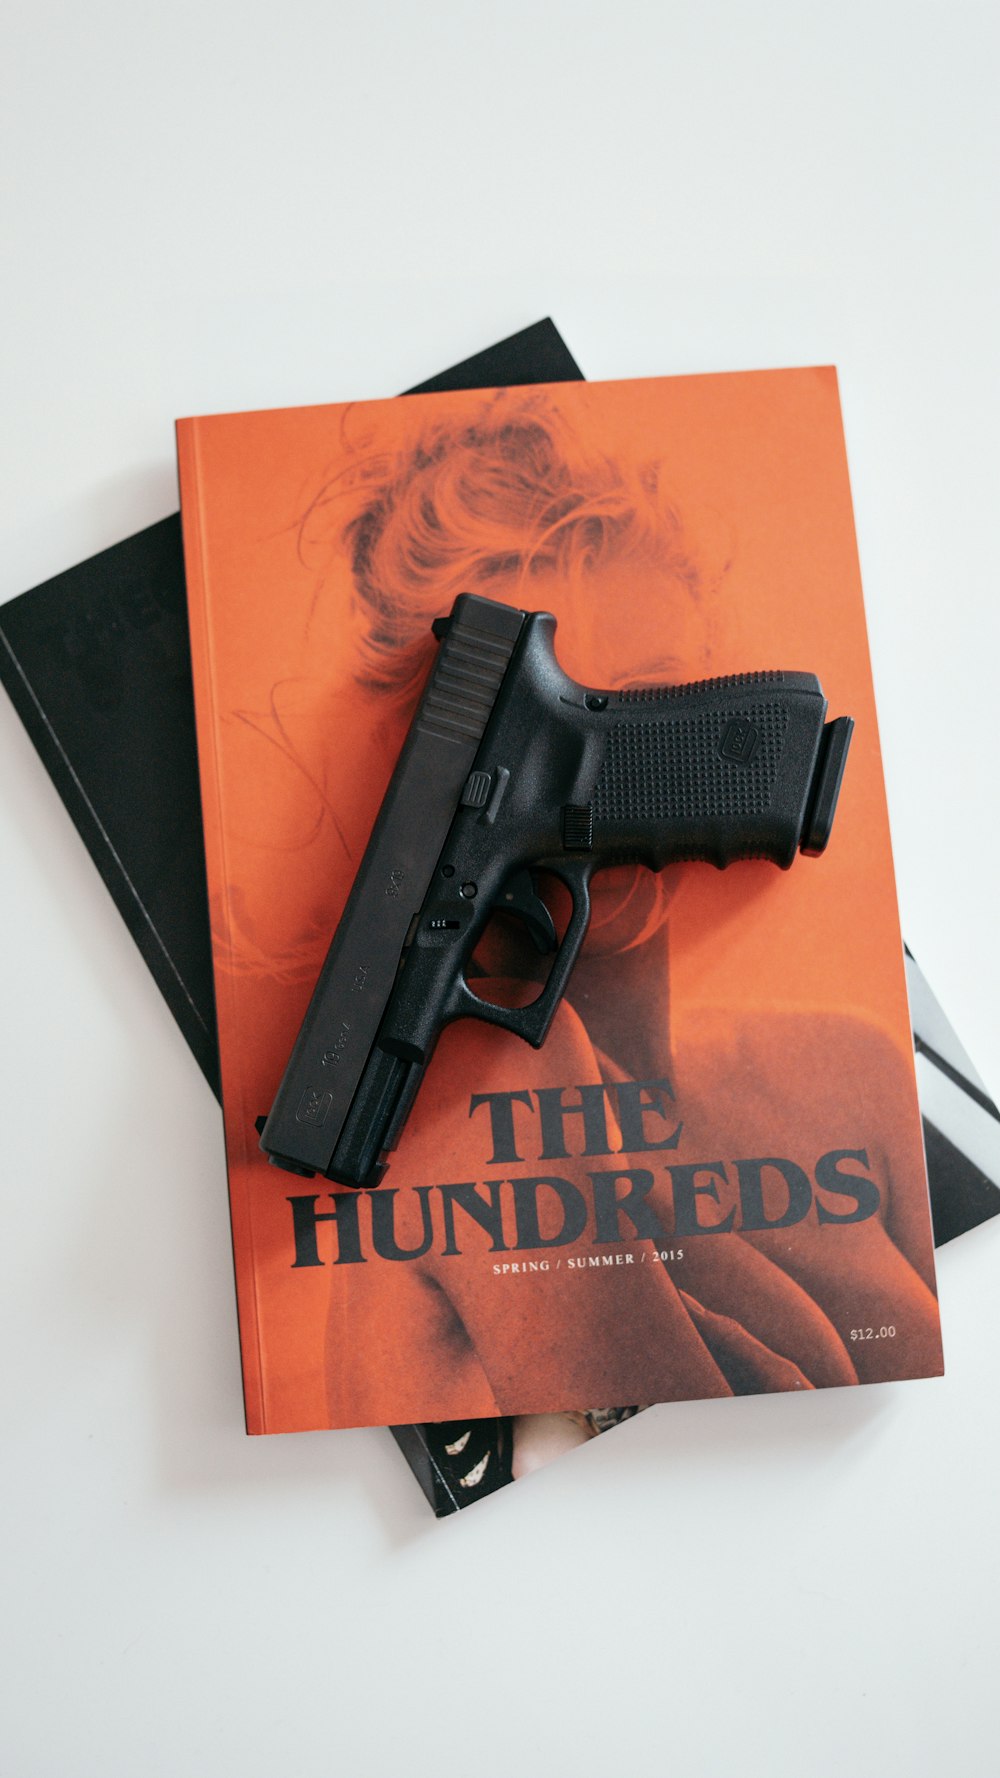 black semi automatic pistol on orange book